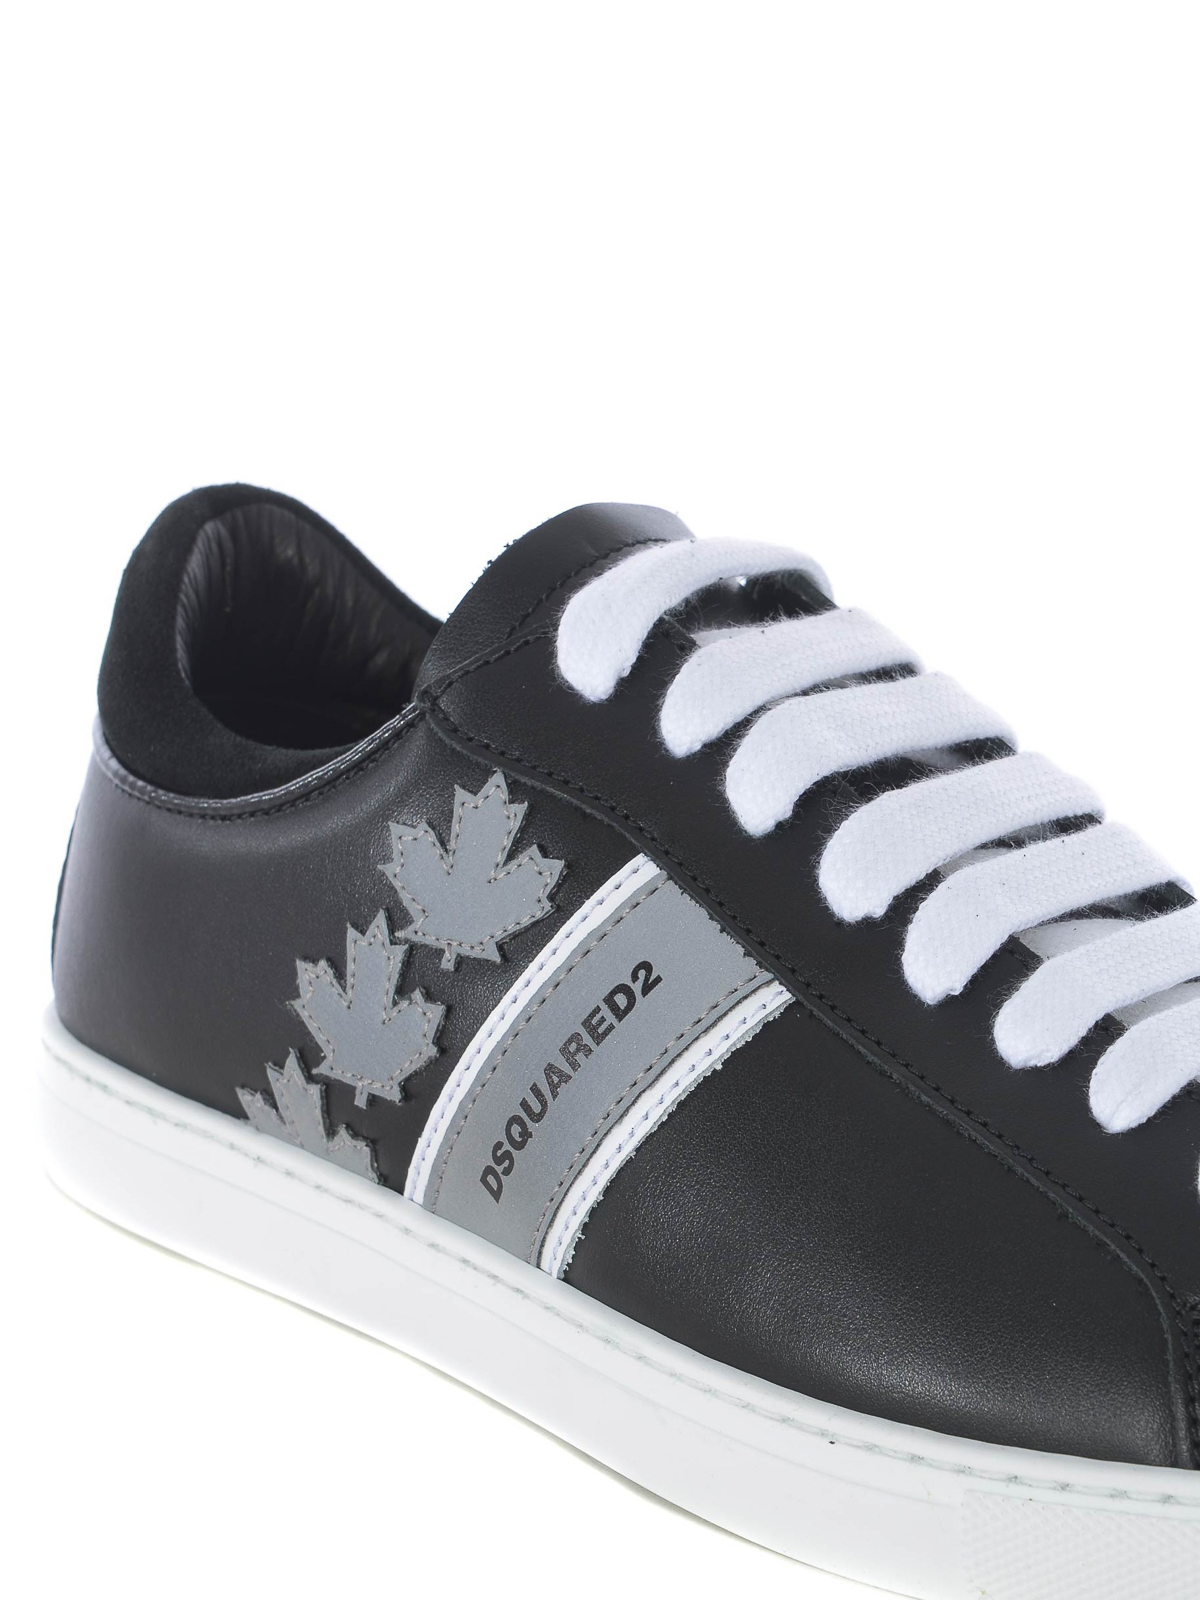 canadian sneakers